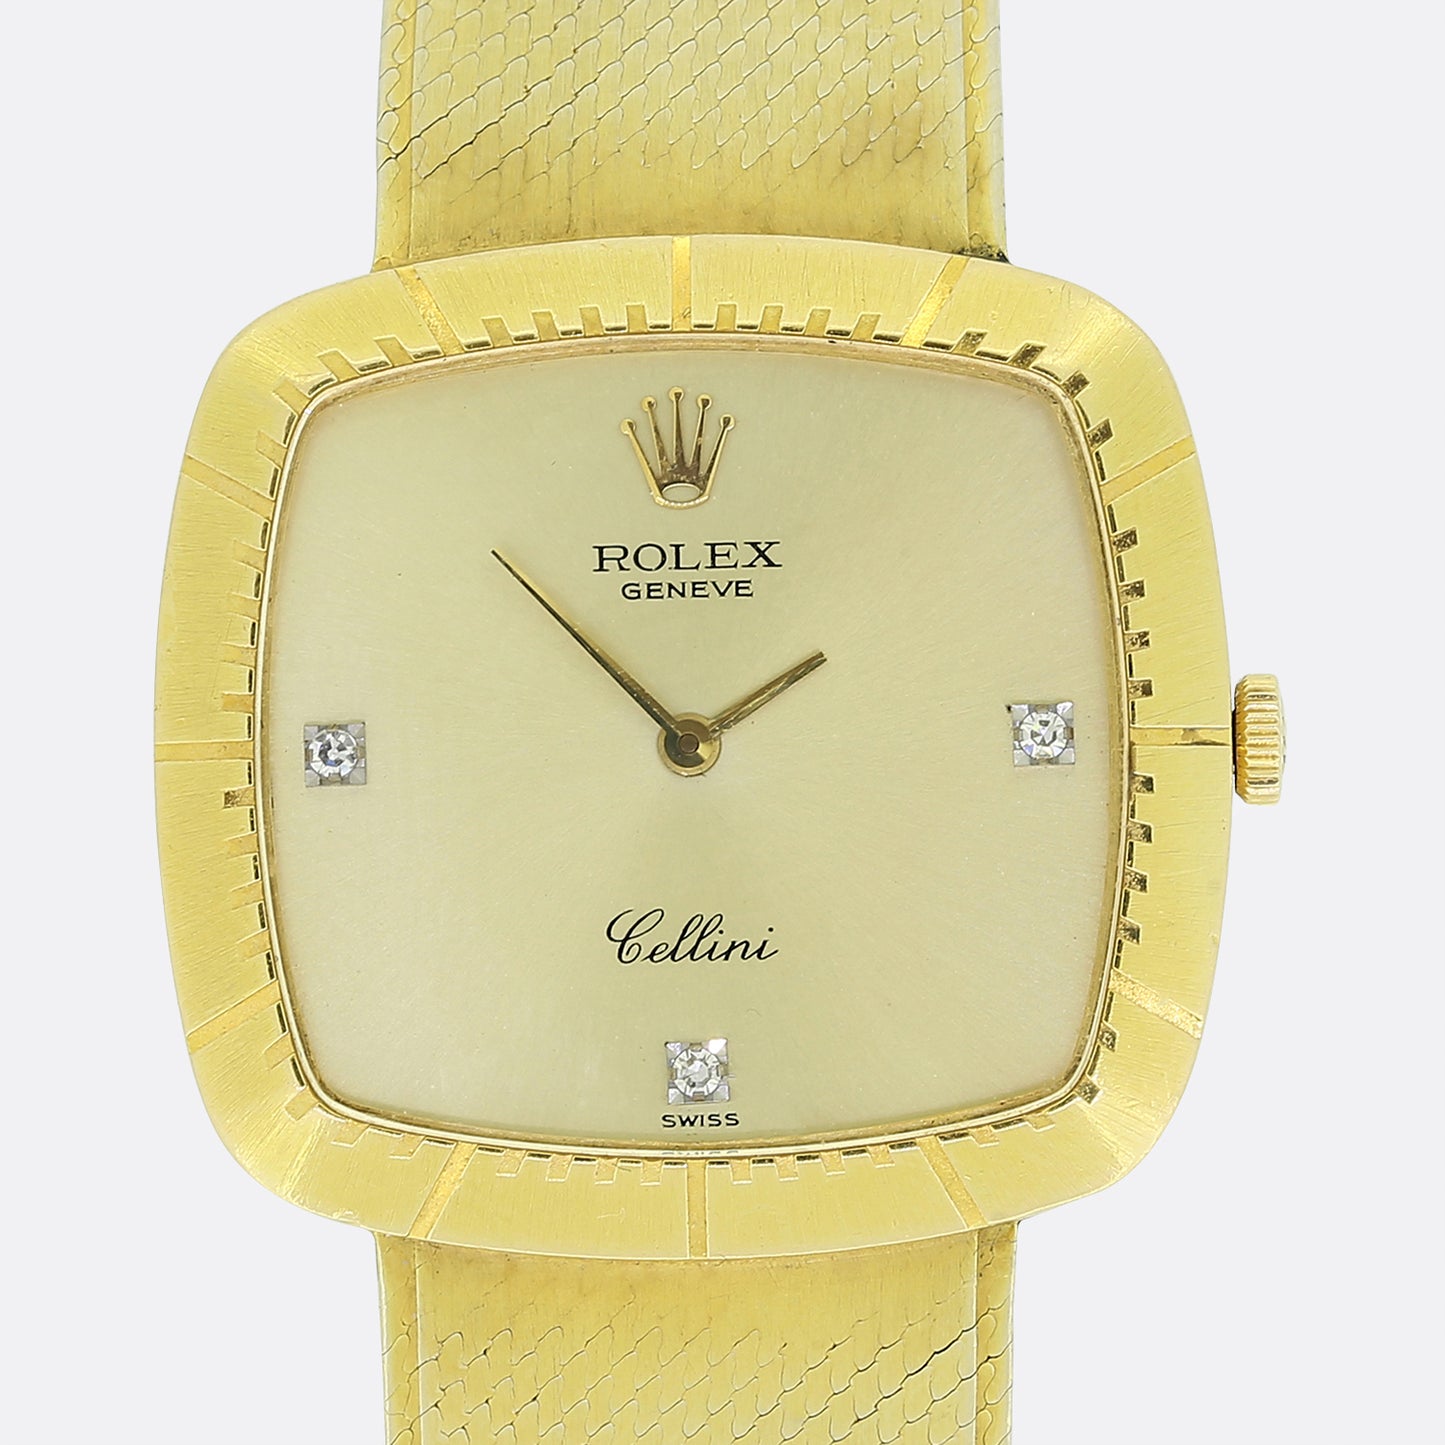 Vintage Rolex Cellini Manual Watch